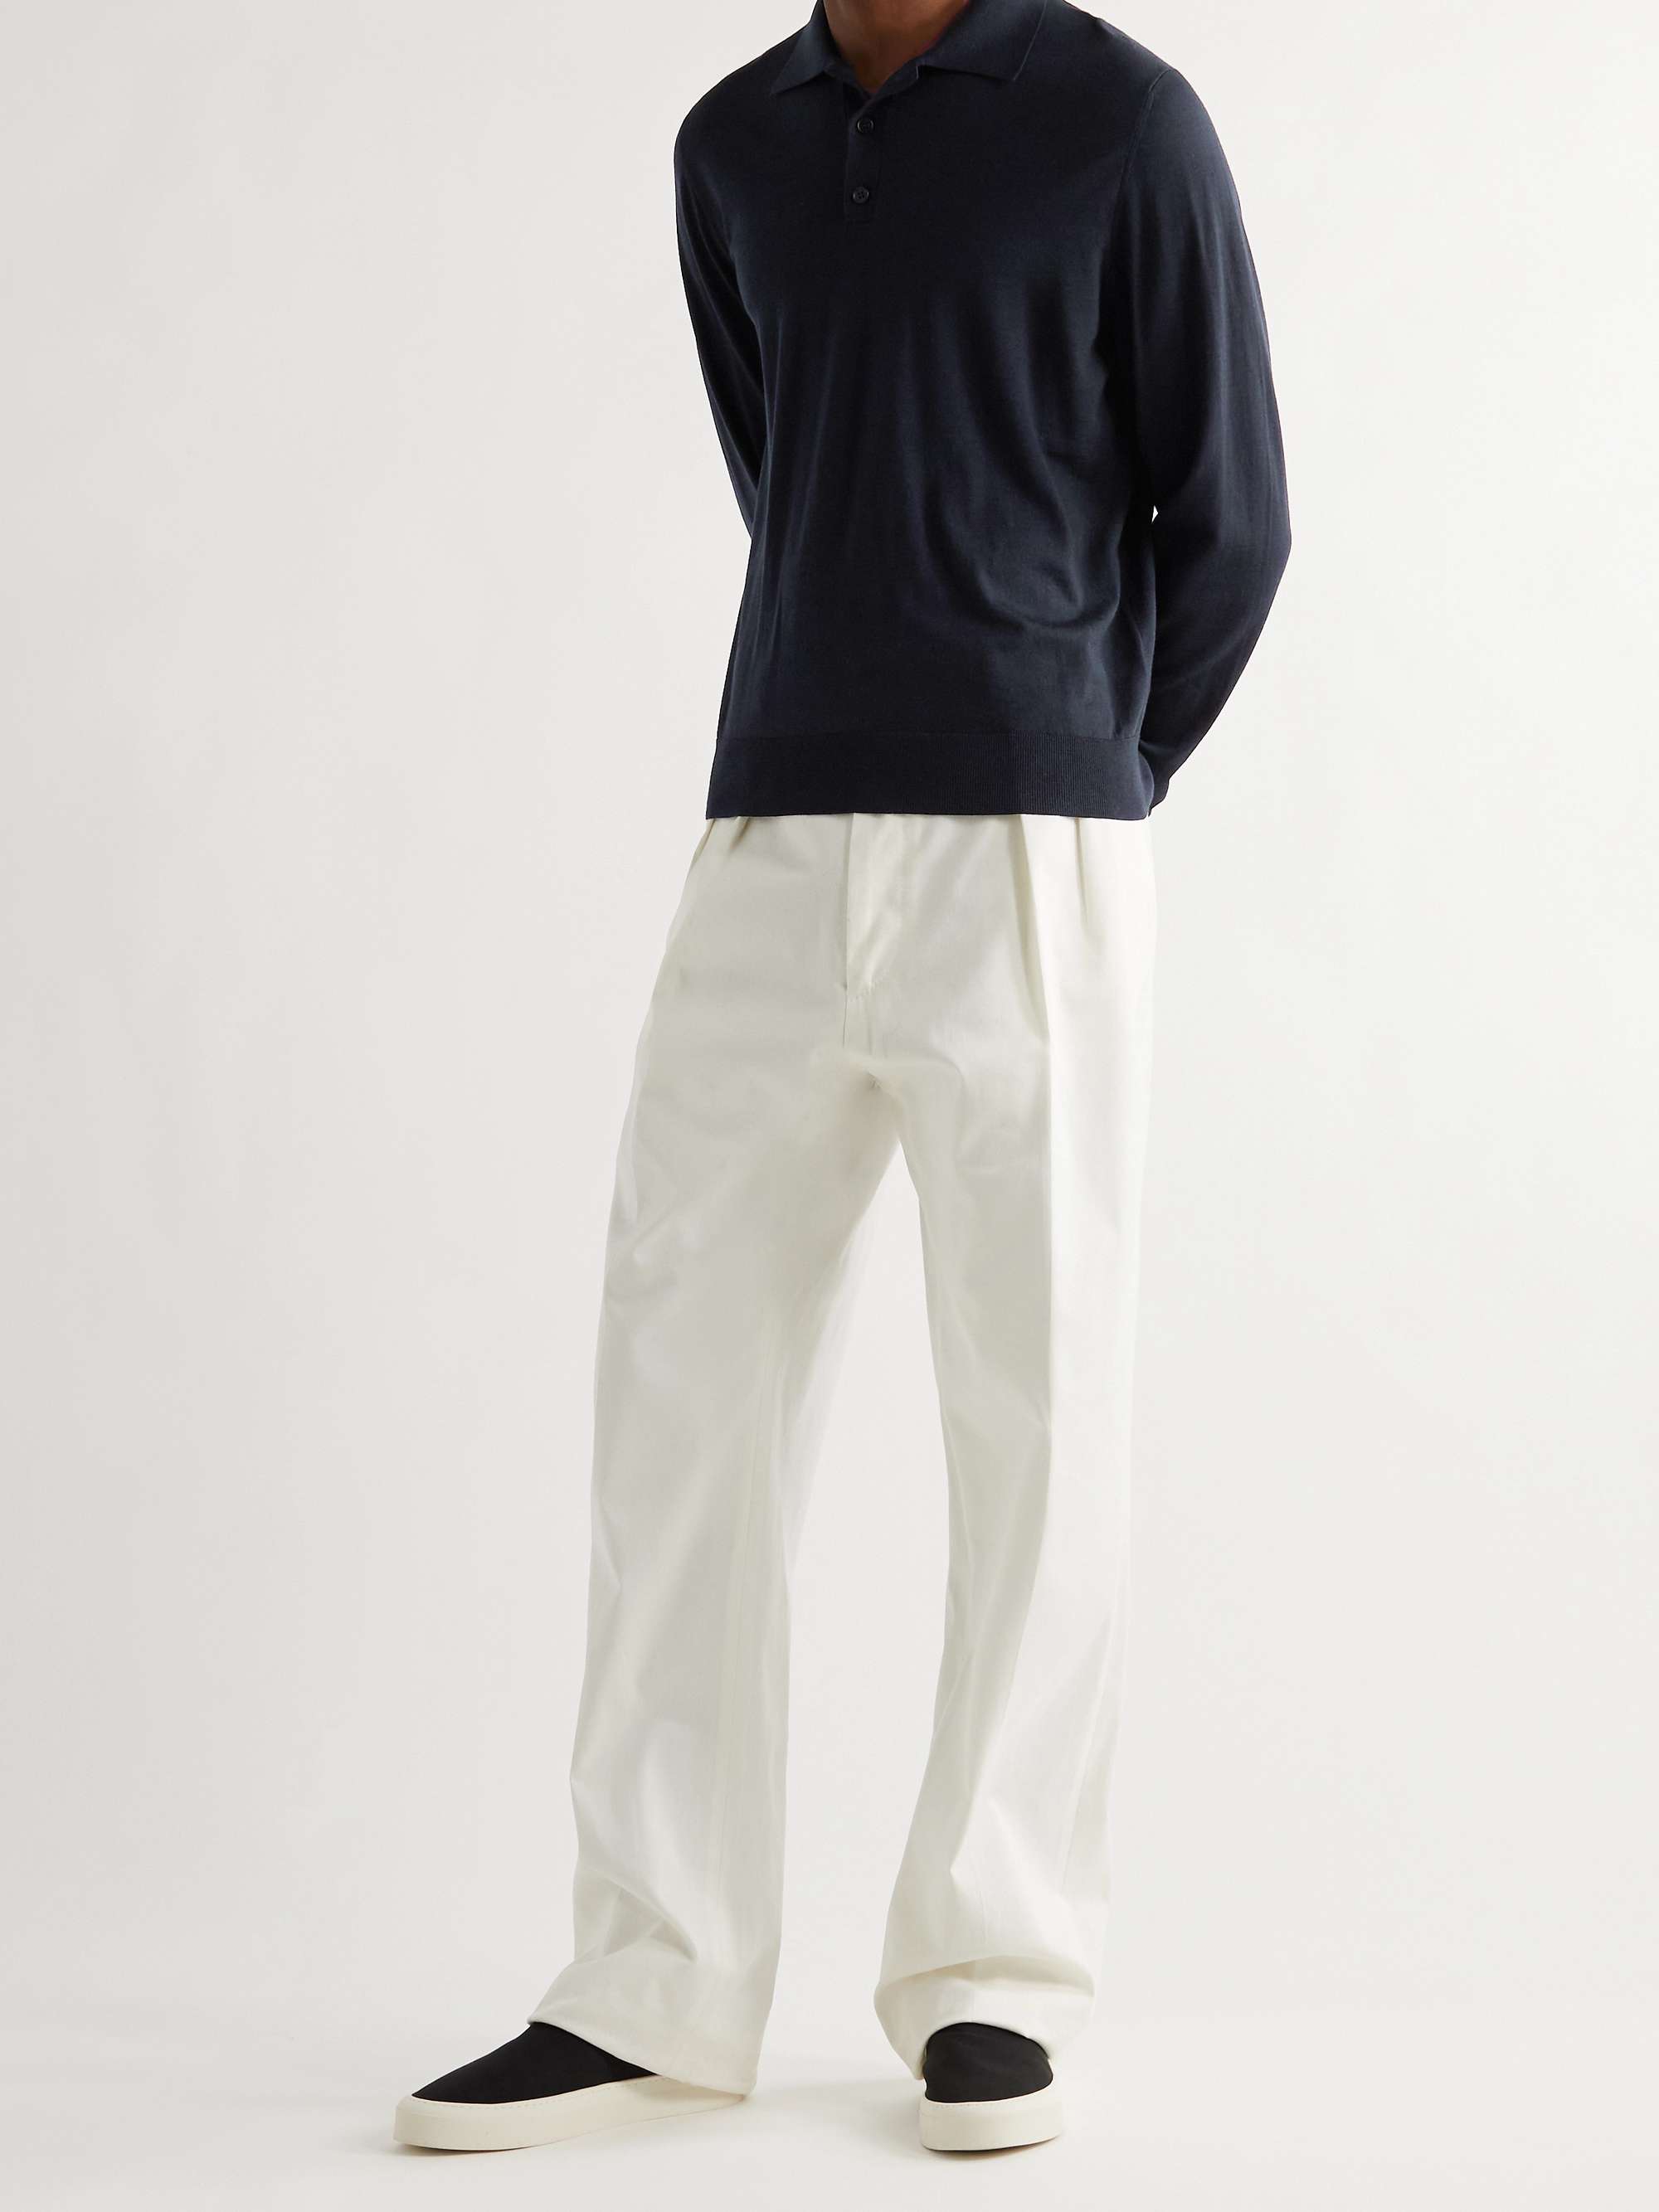 THE ROW Diego Merino Wool Polo Shirt